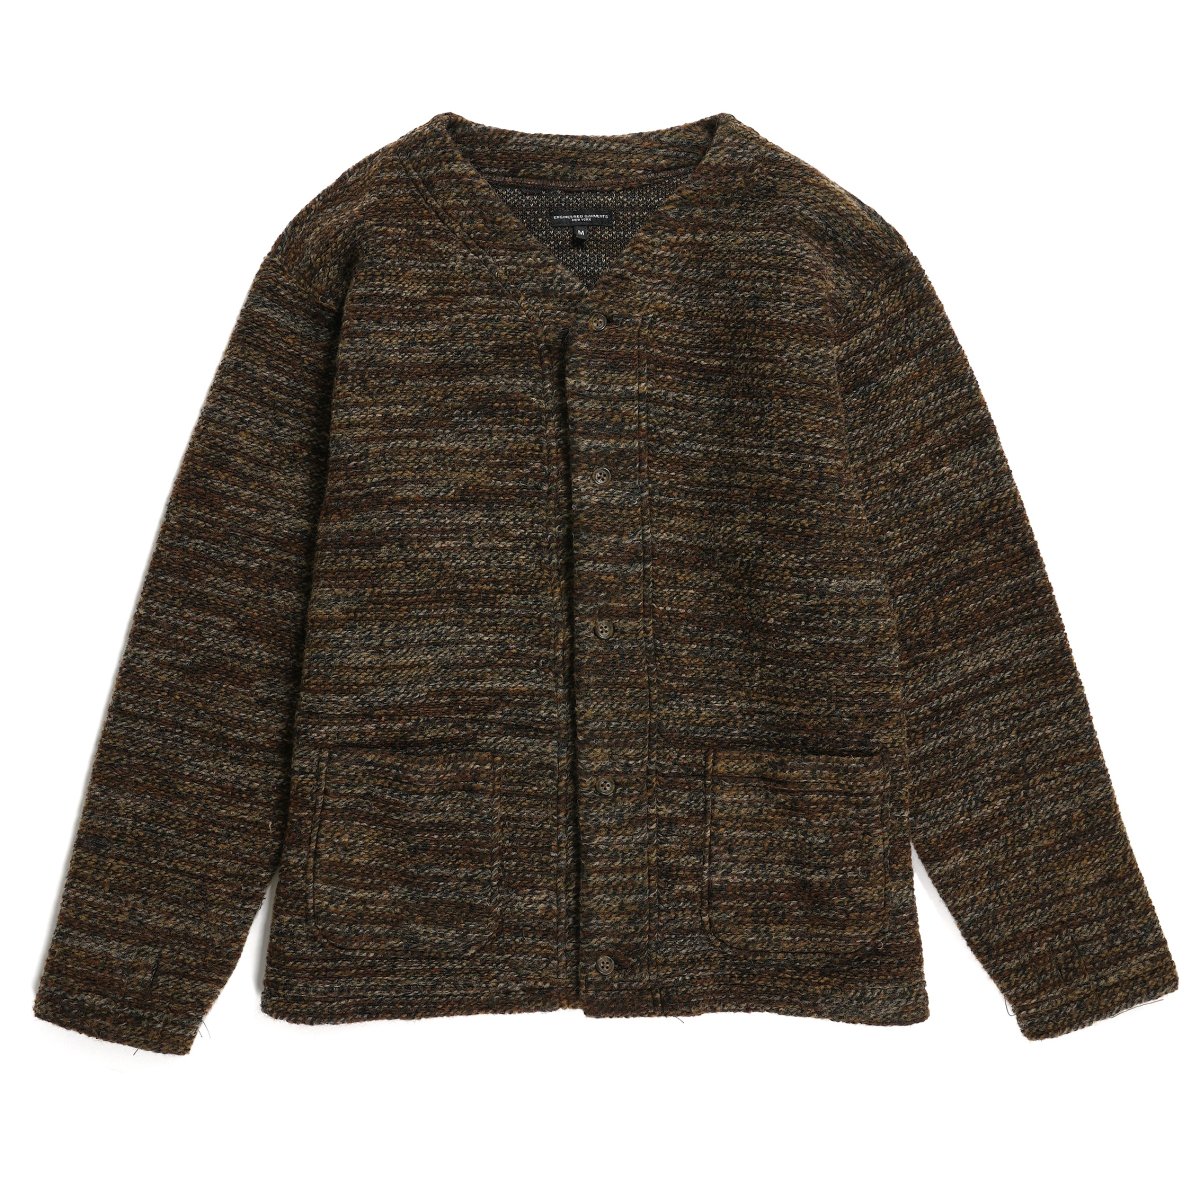 Engineered Garments <BR>Knit Cardigan - Poly Wool Melange Knit - (BROWN)

